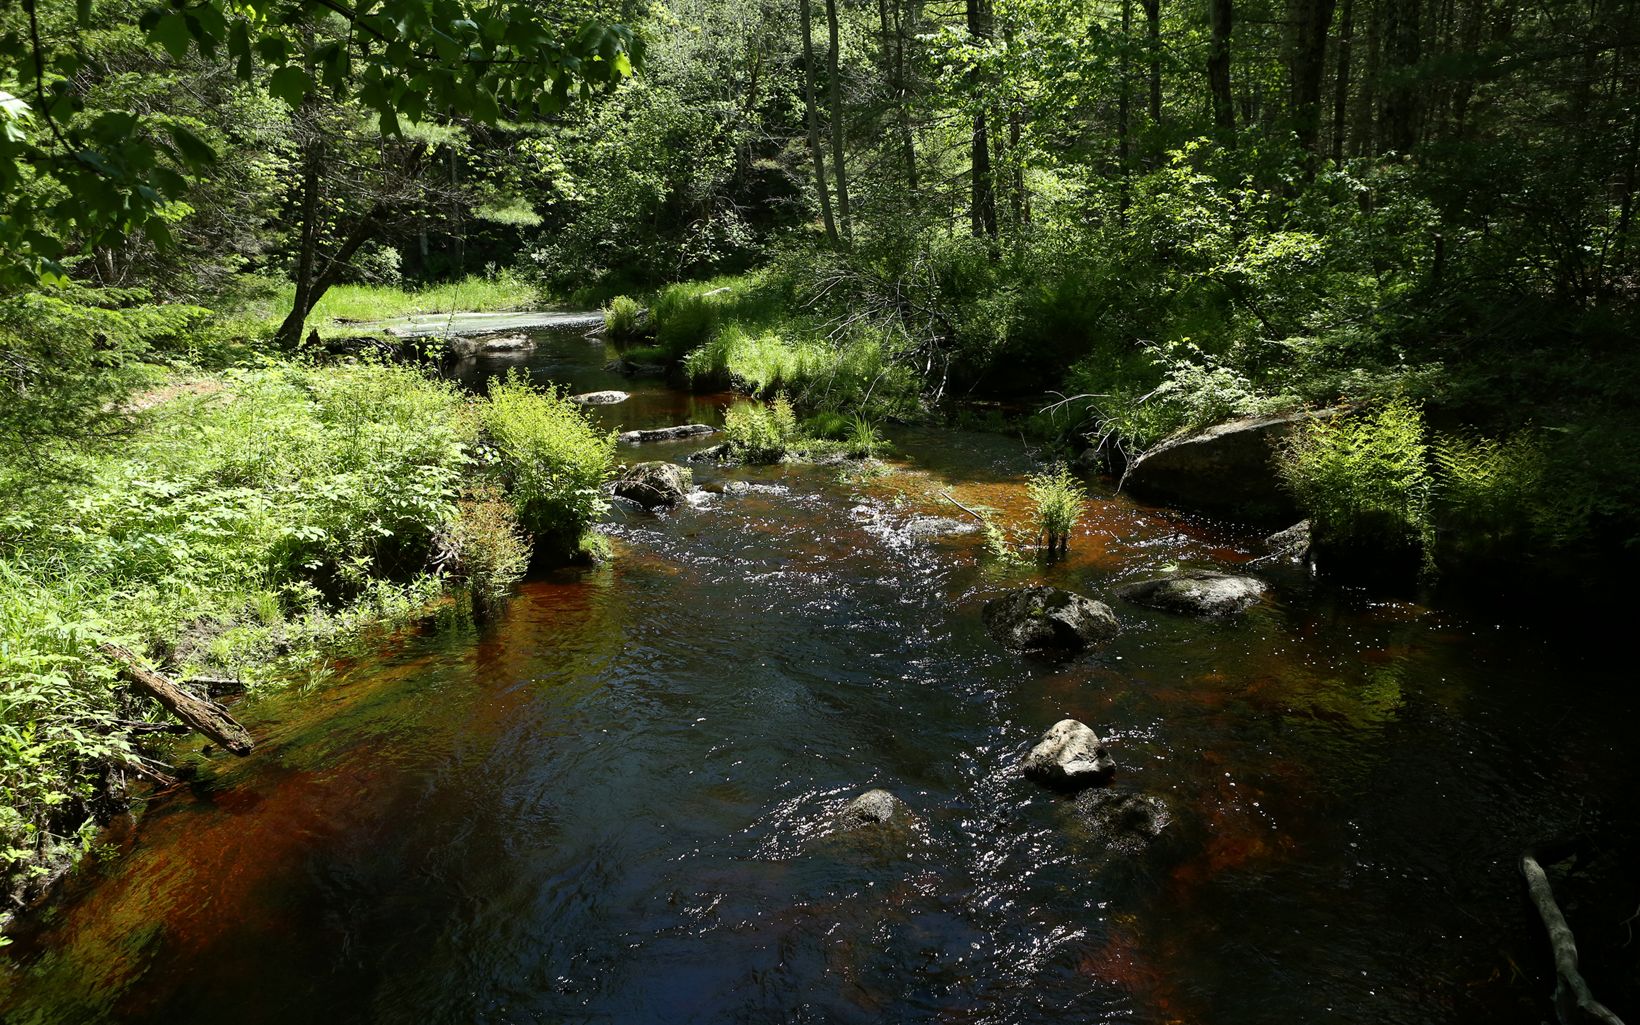 stream meanders through lush green woods